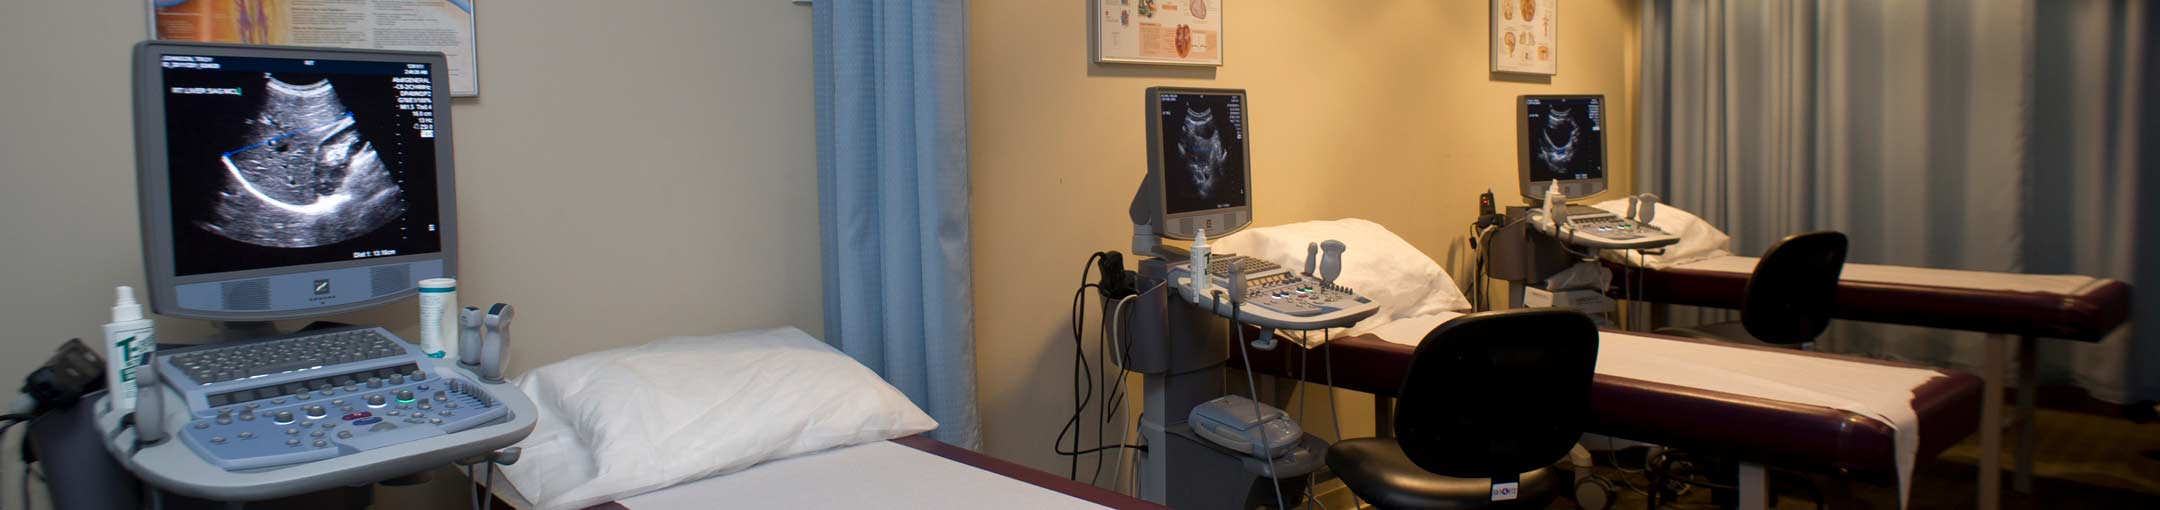 Three empty ultrasound stations